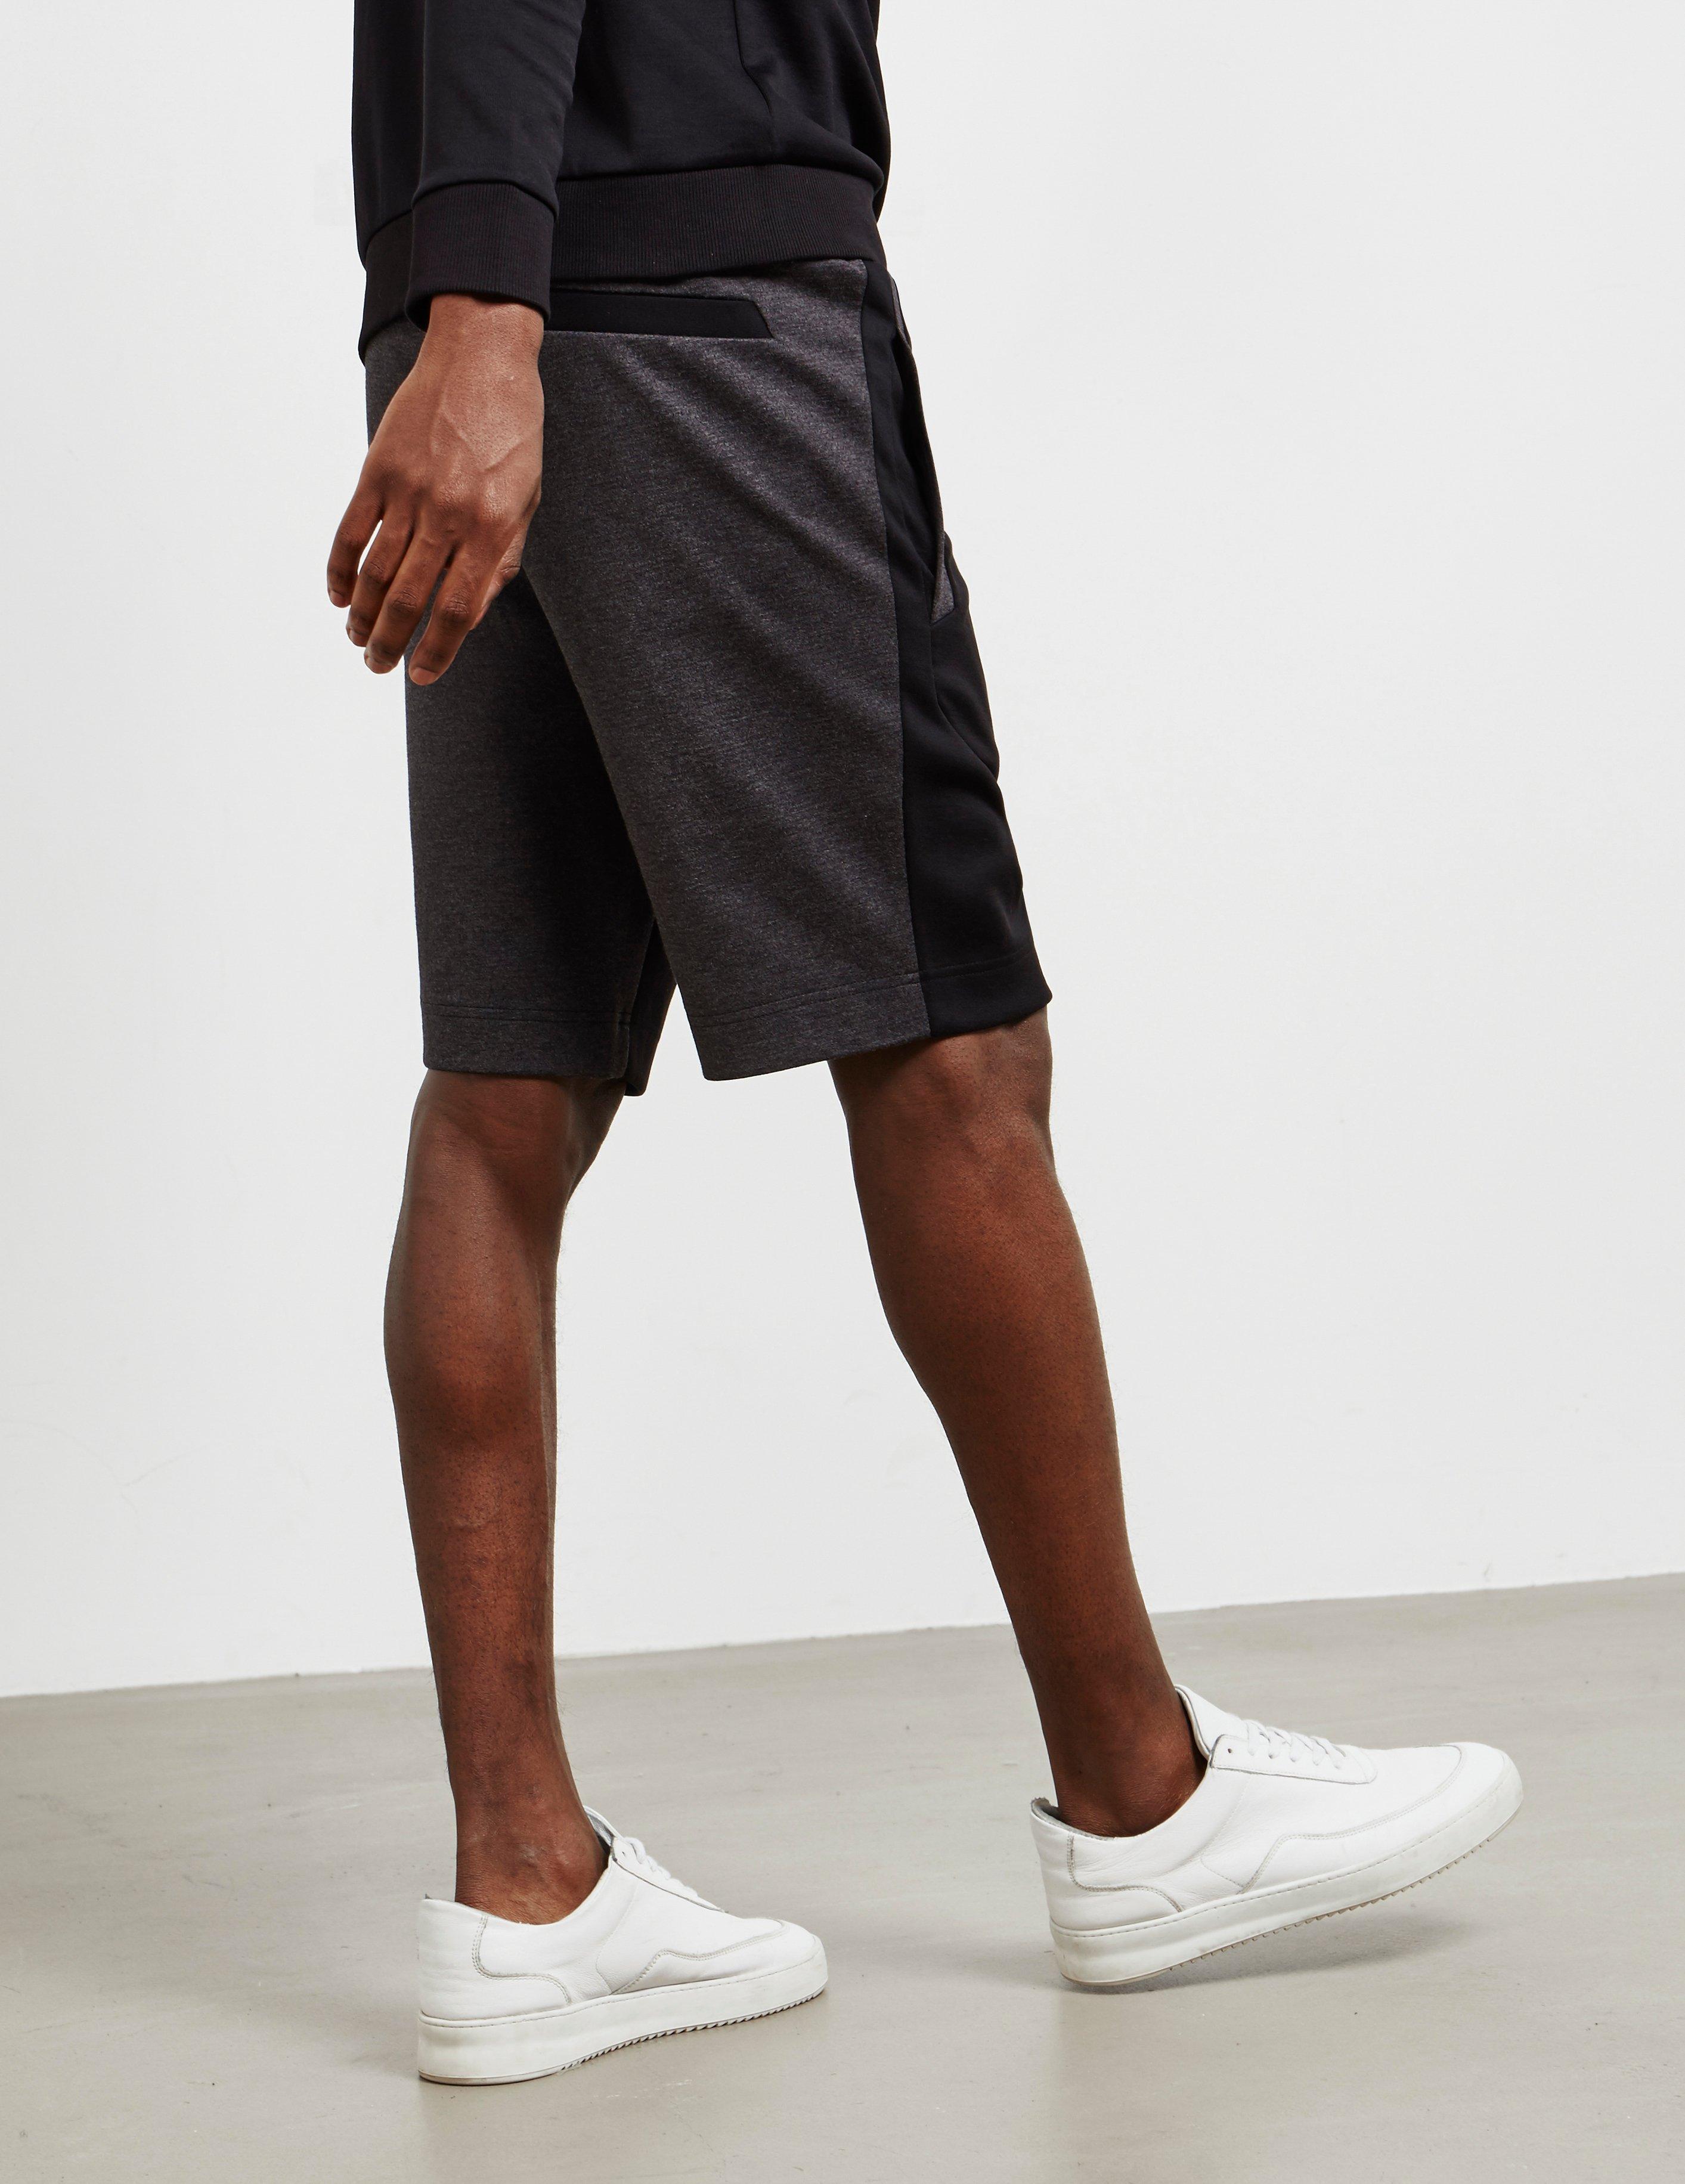 Buy boss headlo fleece shorts cheap online